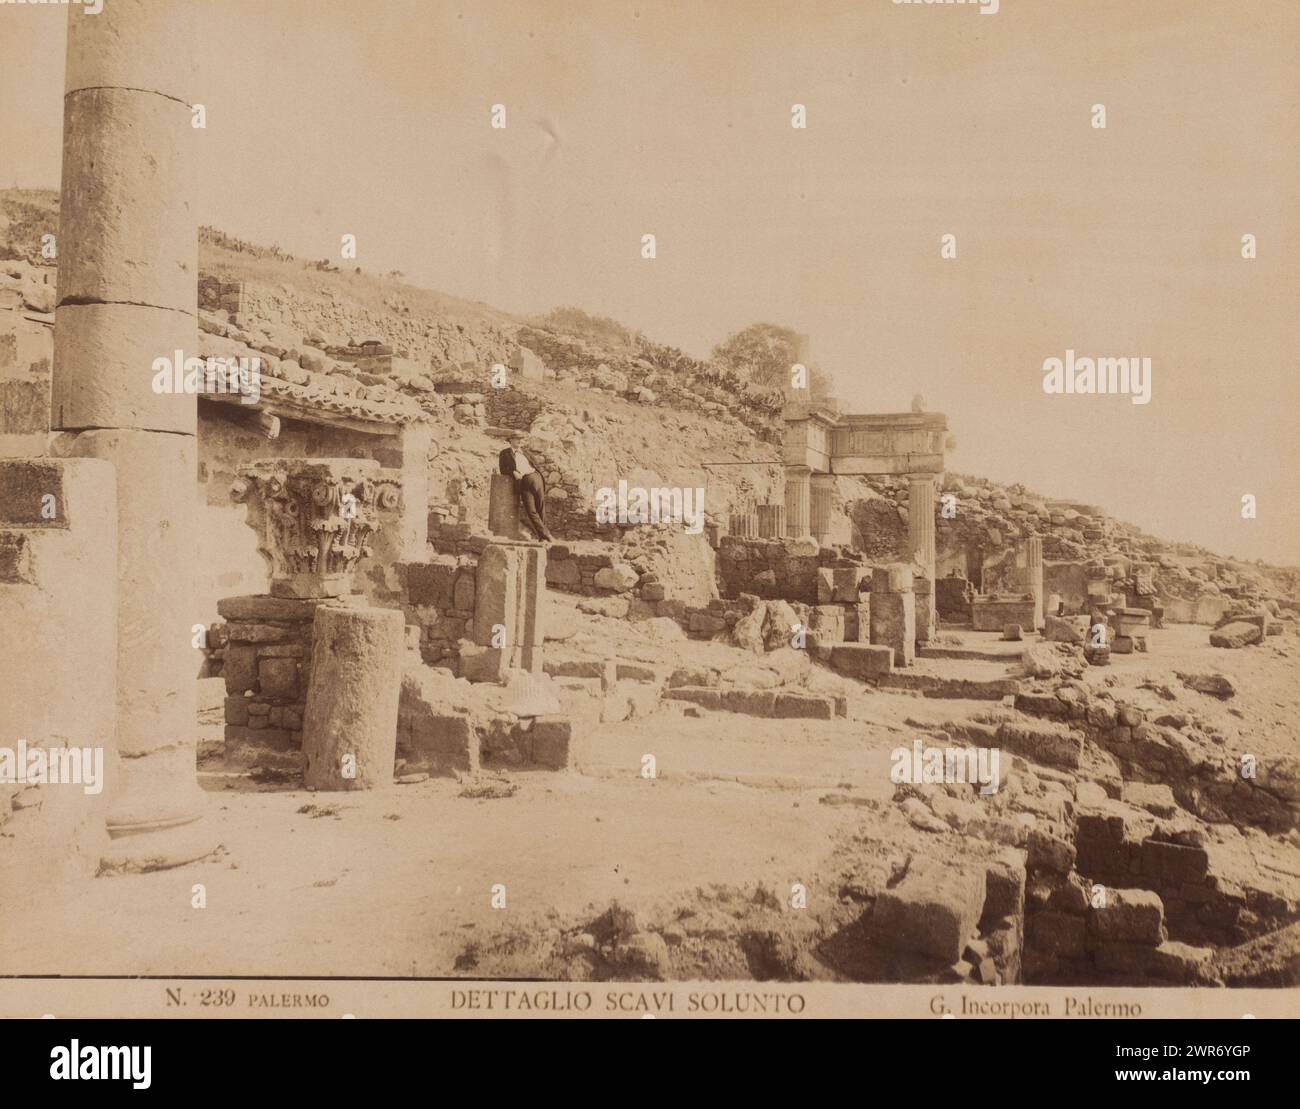 Ruins of Solunto in Palermo, Dettaglio scavi Solunto (title on object), Giuseppe Incorpora, Palermo, 1856 - 1914, paper, albumen print, height 196 mm × width 250 mm, photograph Stock Photo